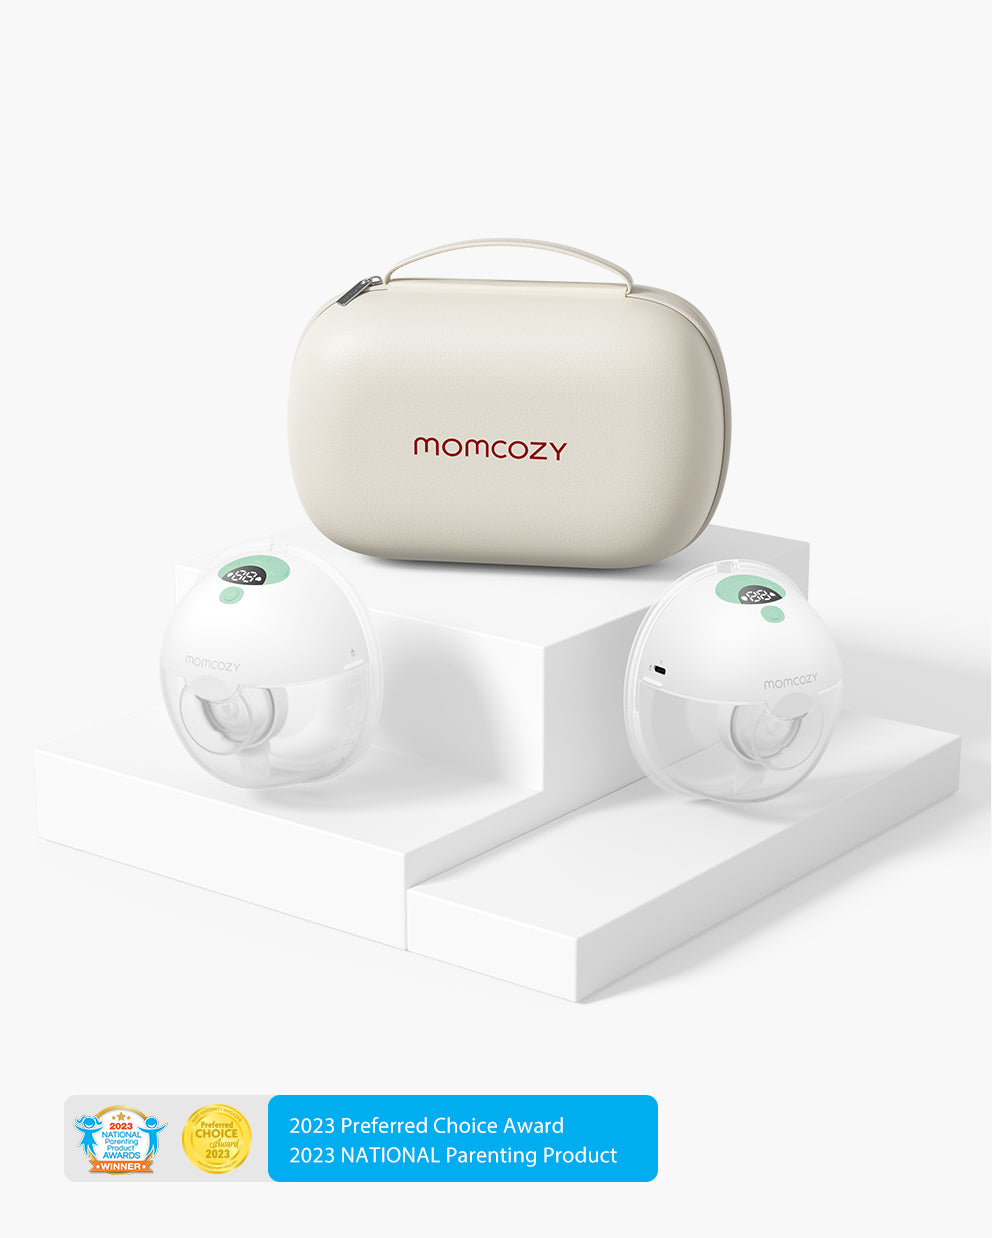 Momcozy m5 moms - what settings do you use? Do you prefer 🩷 +